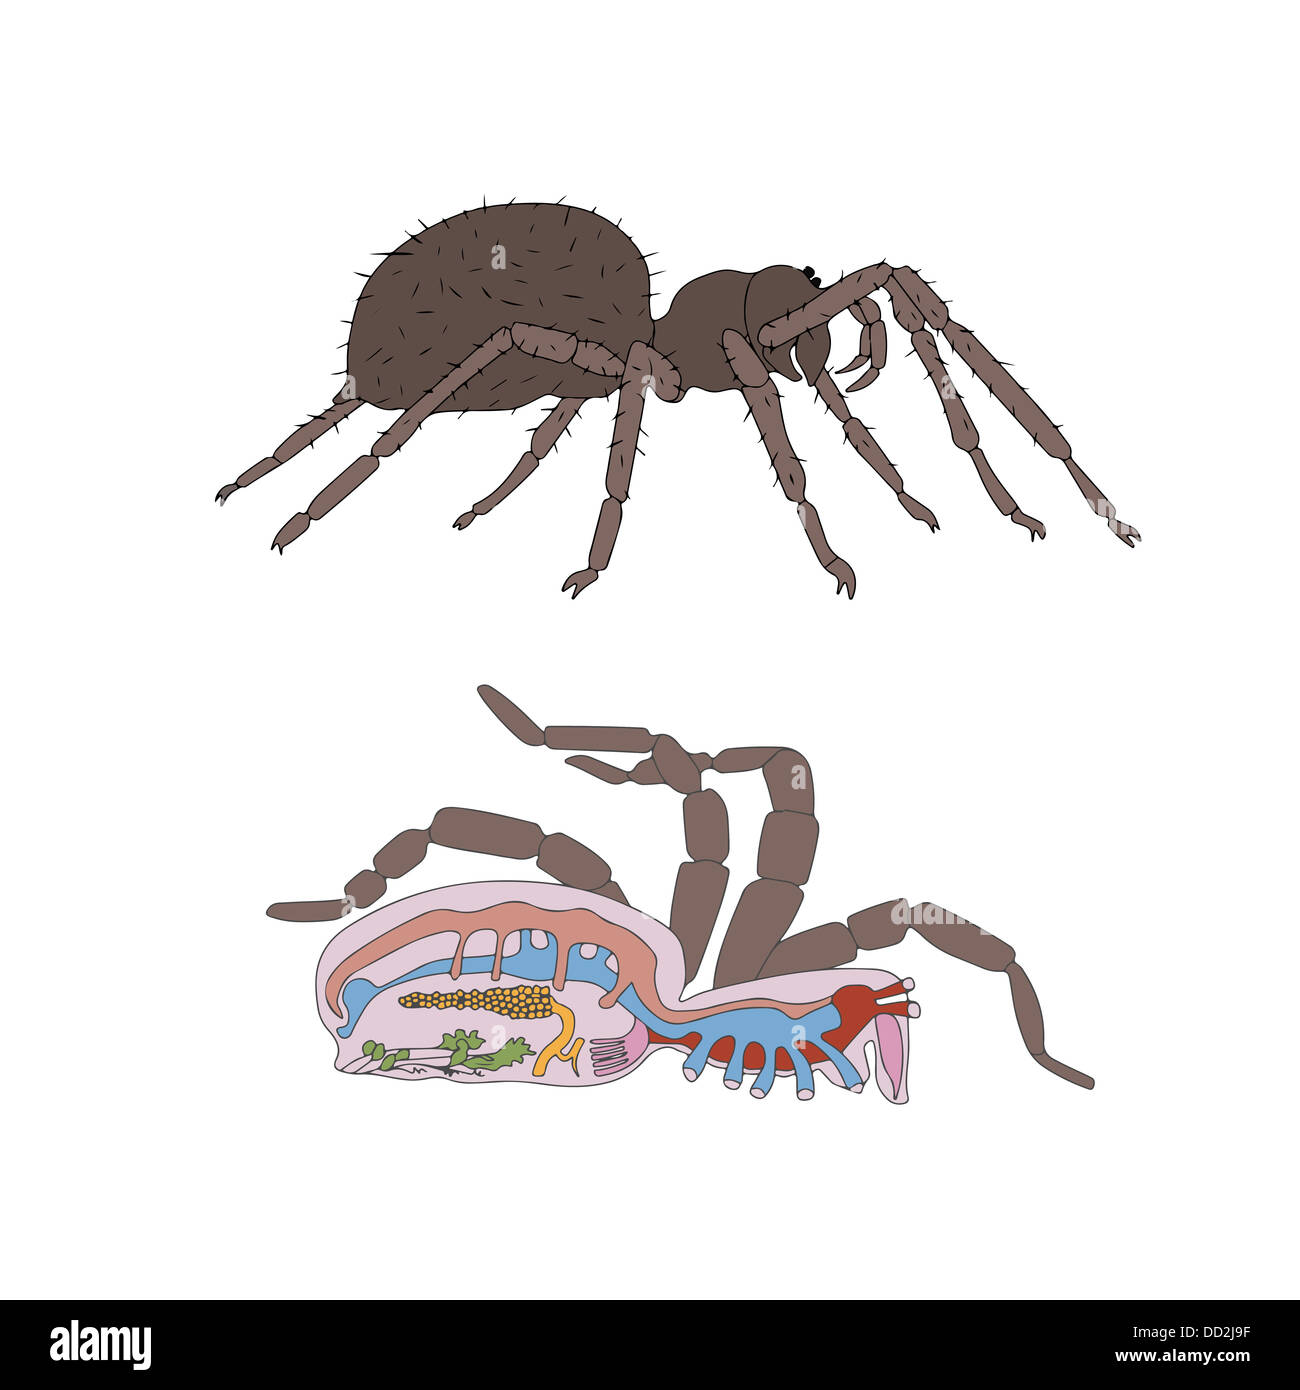 zoology, anatomy, morphology, cross-section of spider Stock Photo